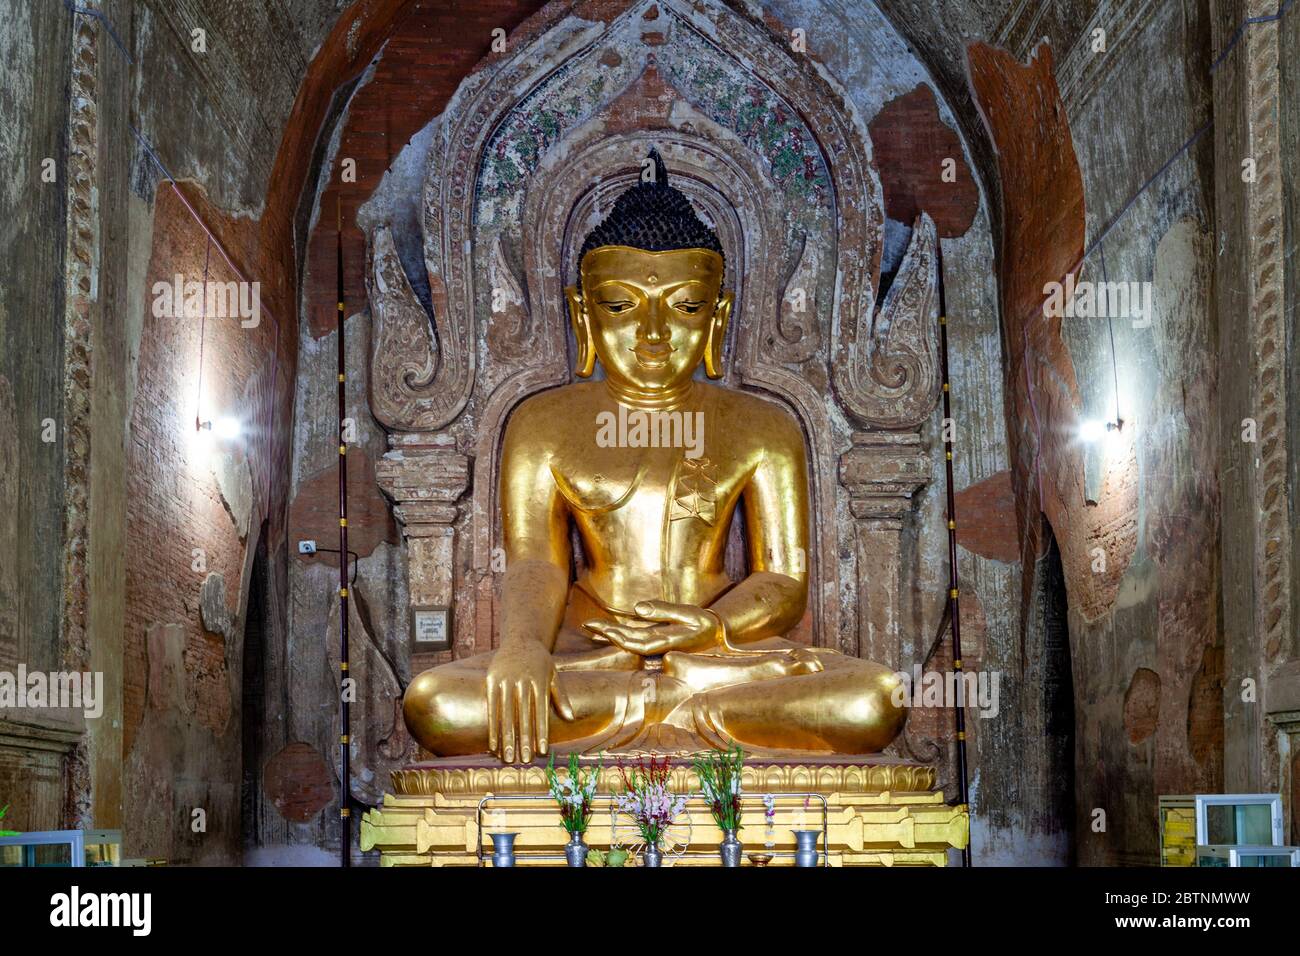 Eine große Buddha-Statue im Tempel Htilominlo, Bagan, Mandalay Region, Myanmar. Stockfoto